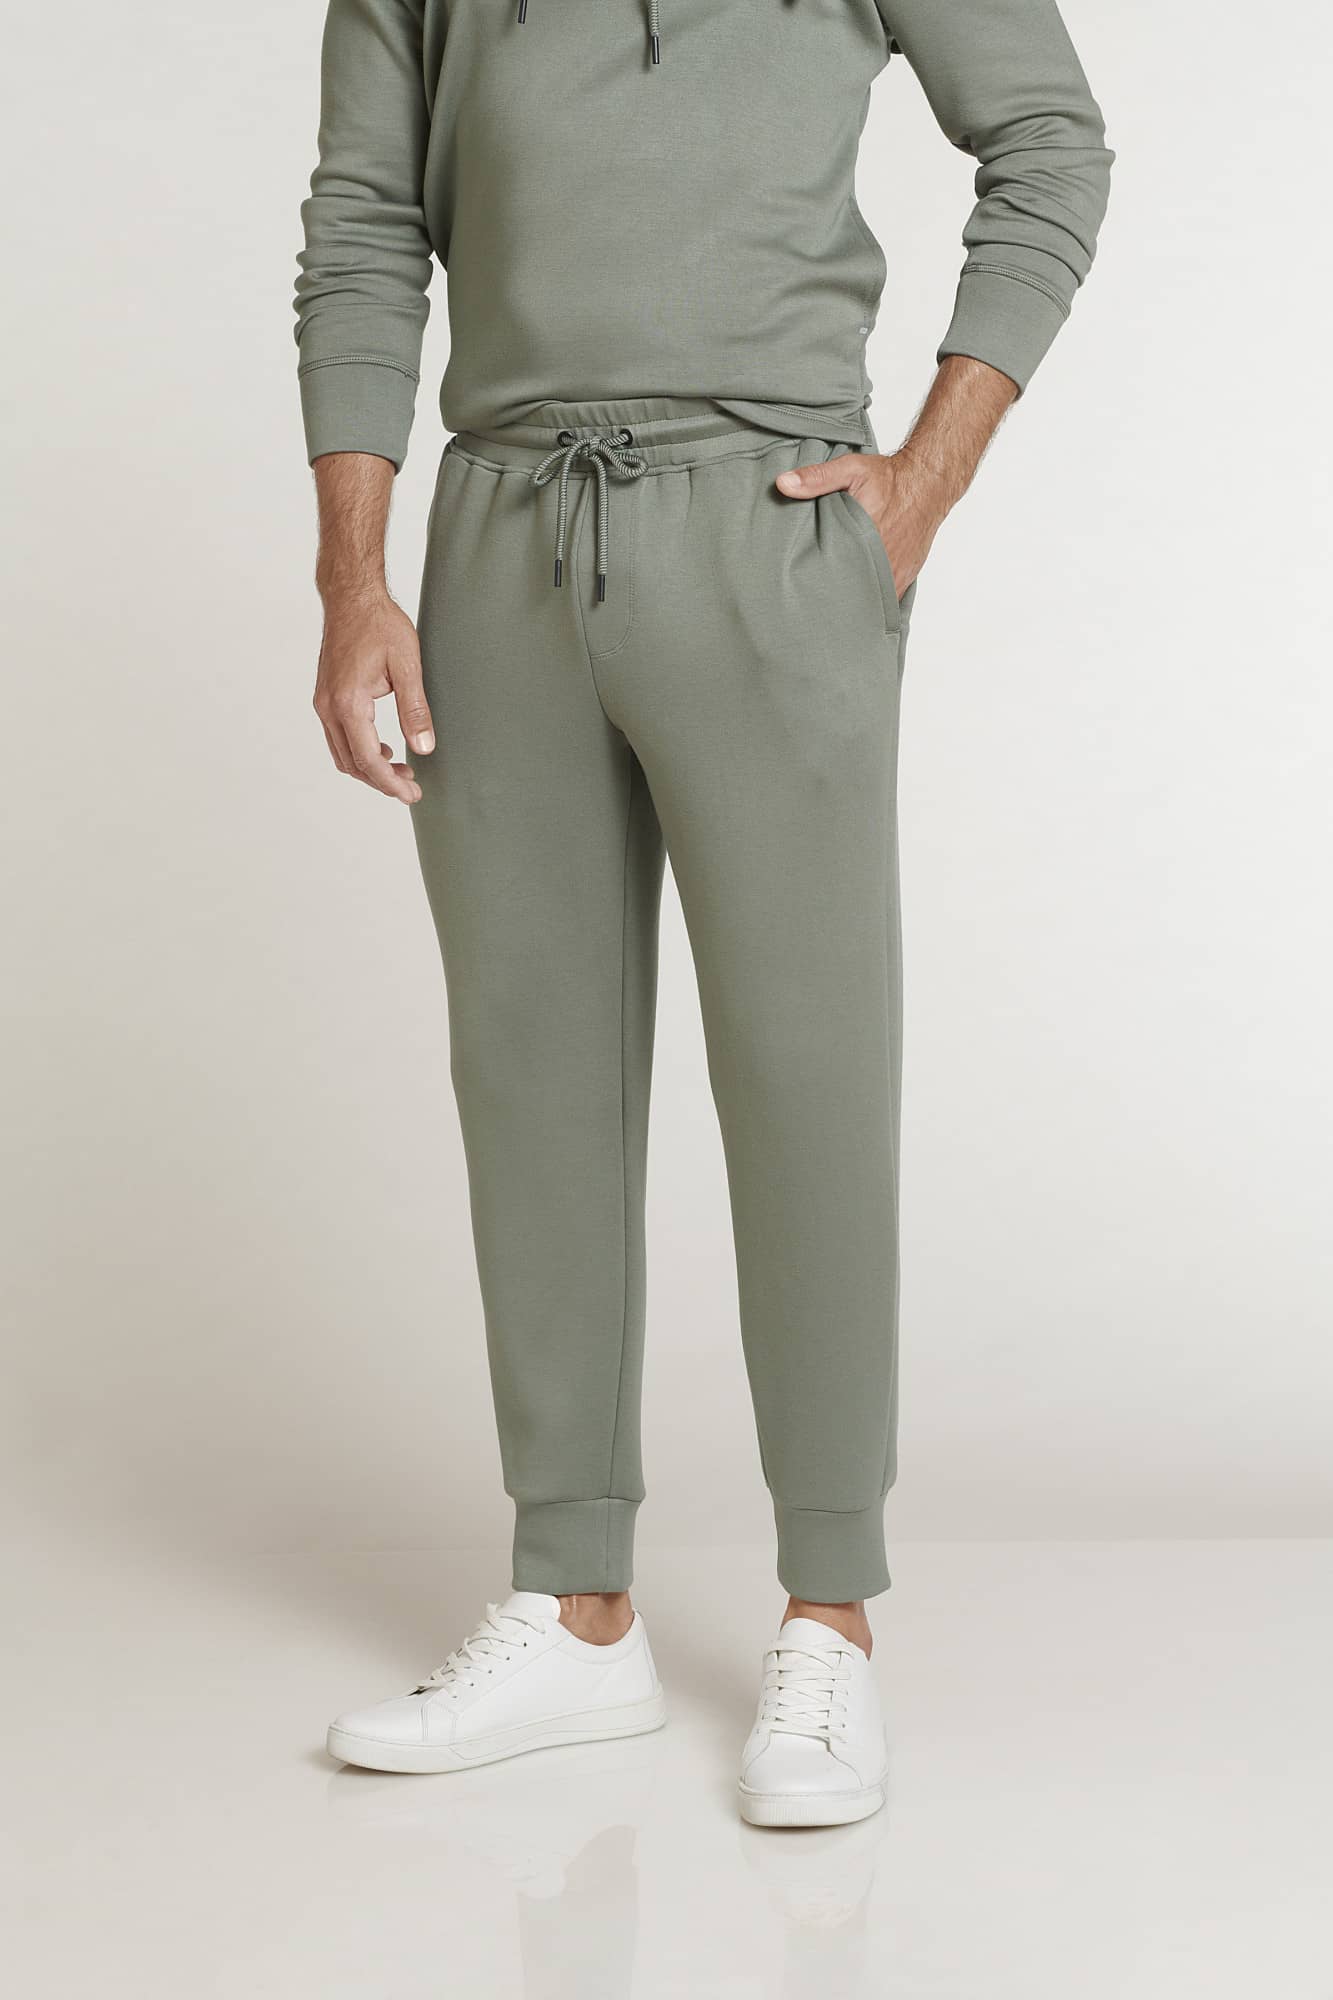 Ladies' JOCKEY JOGGER Activewear Pant Super Soft Tapered Leg, Pick Color &  Size | eBay